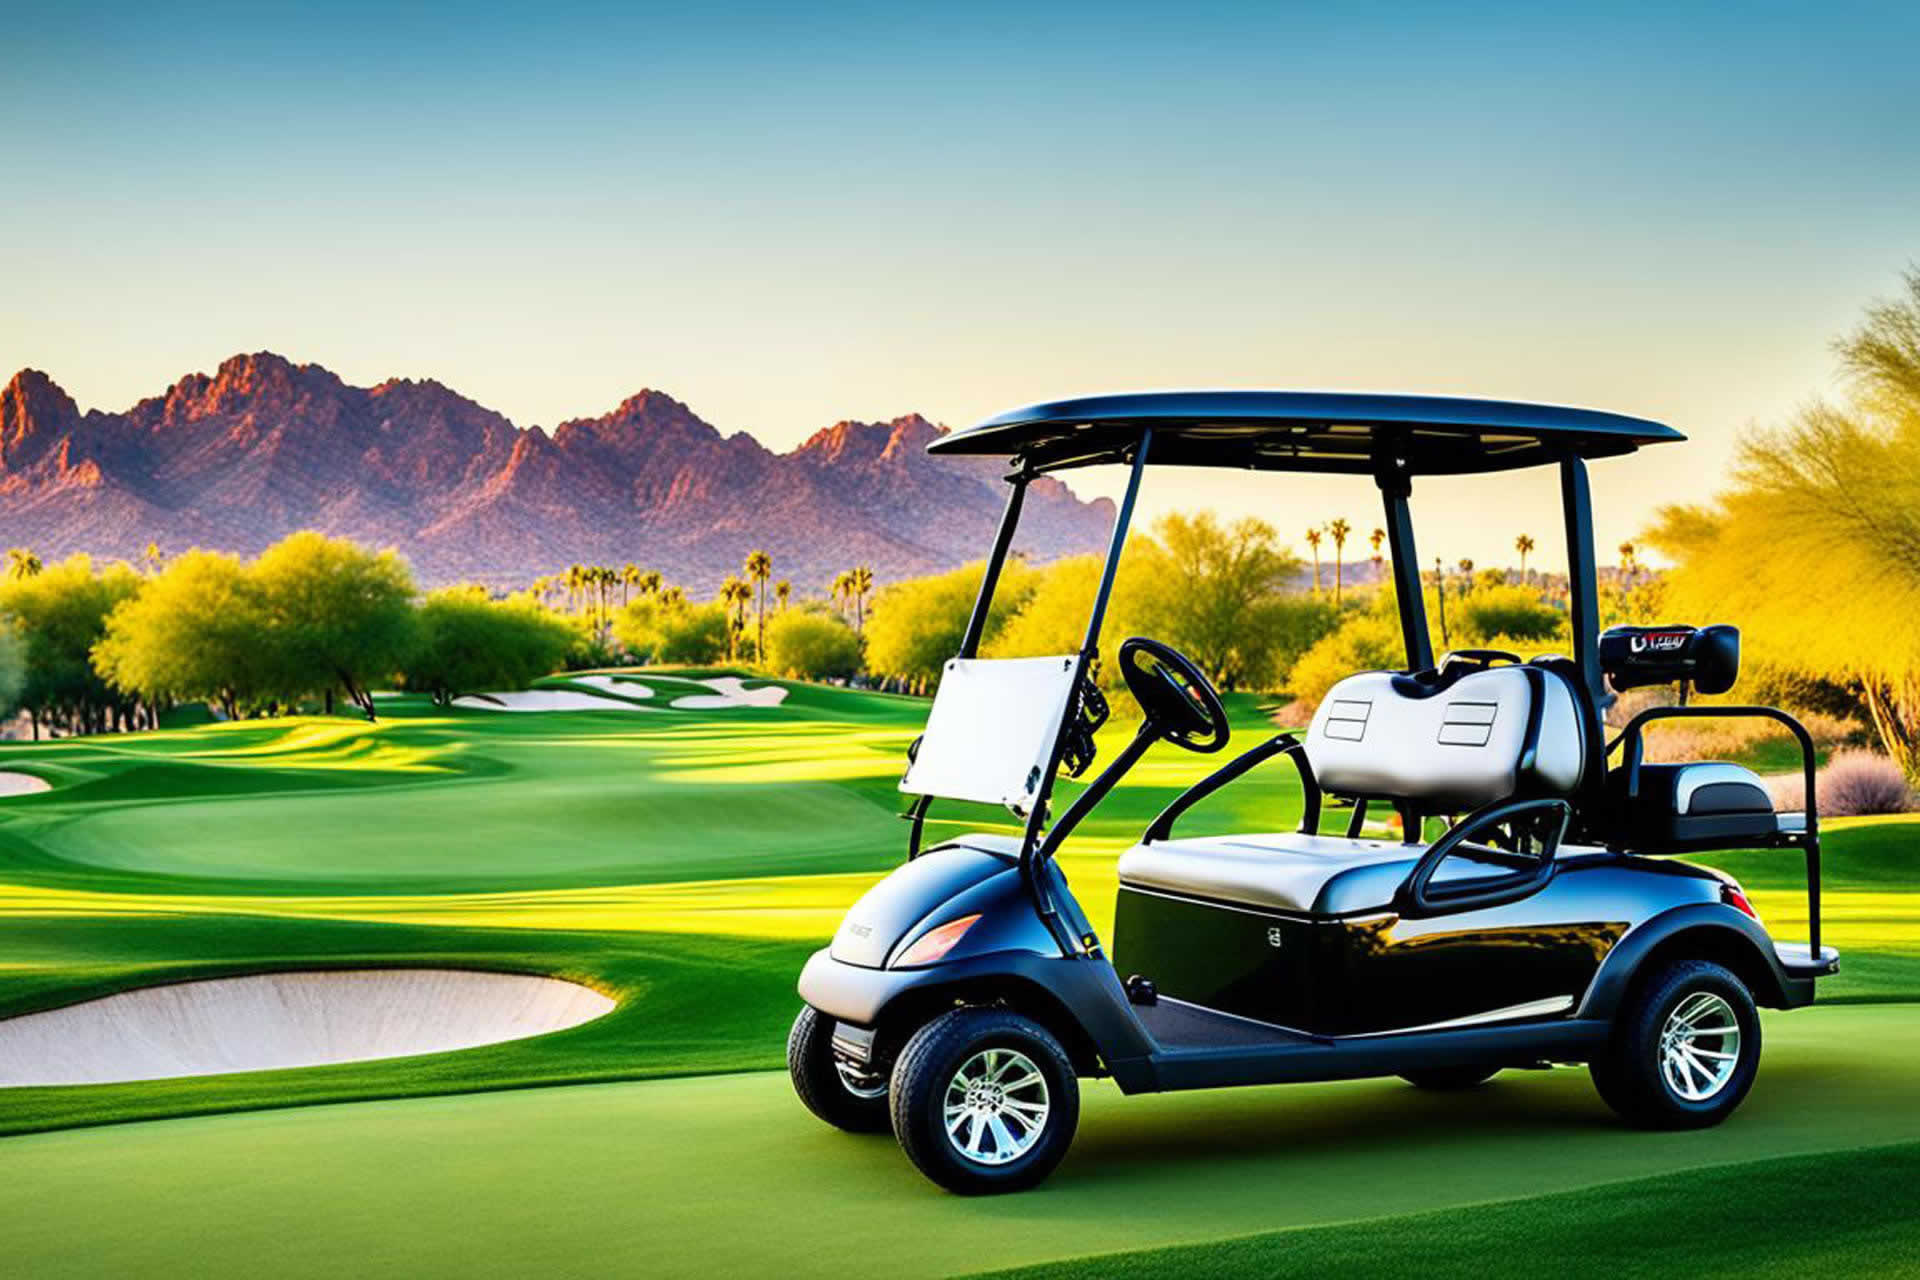 Luxury Golf Transportation in Phoenix Arizona